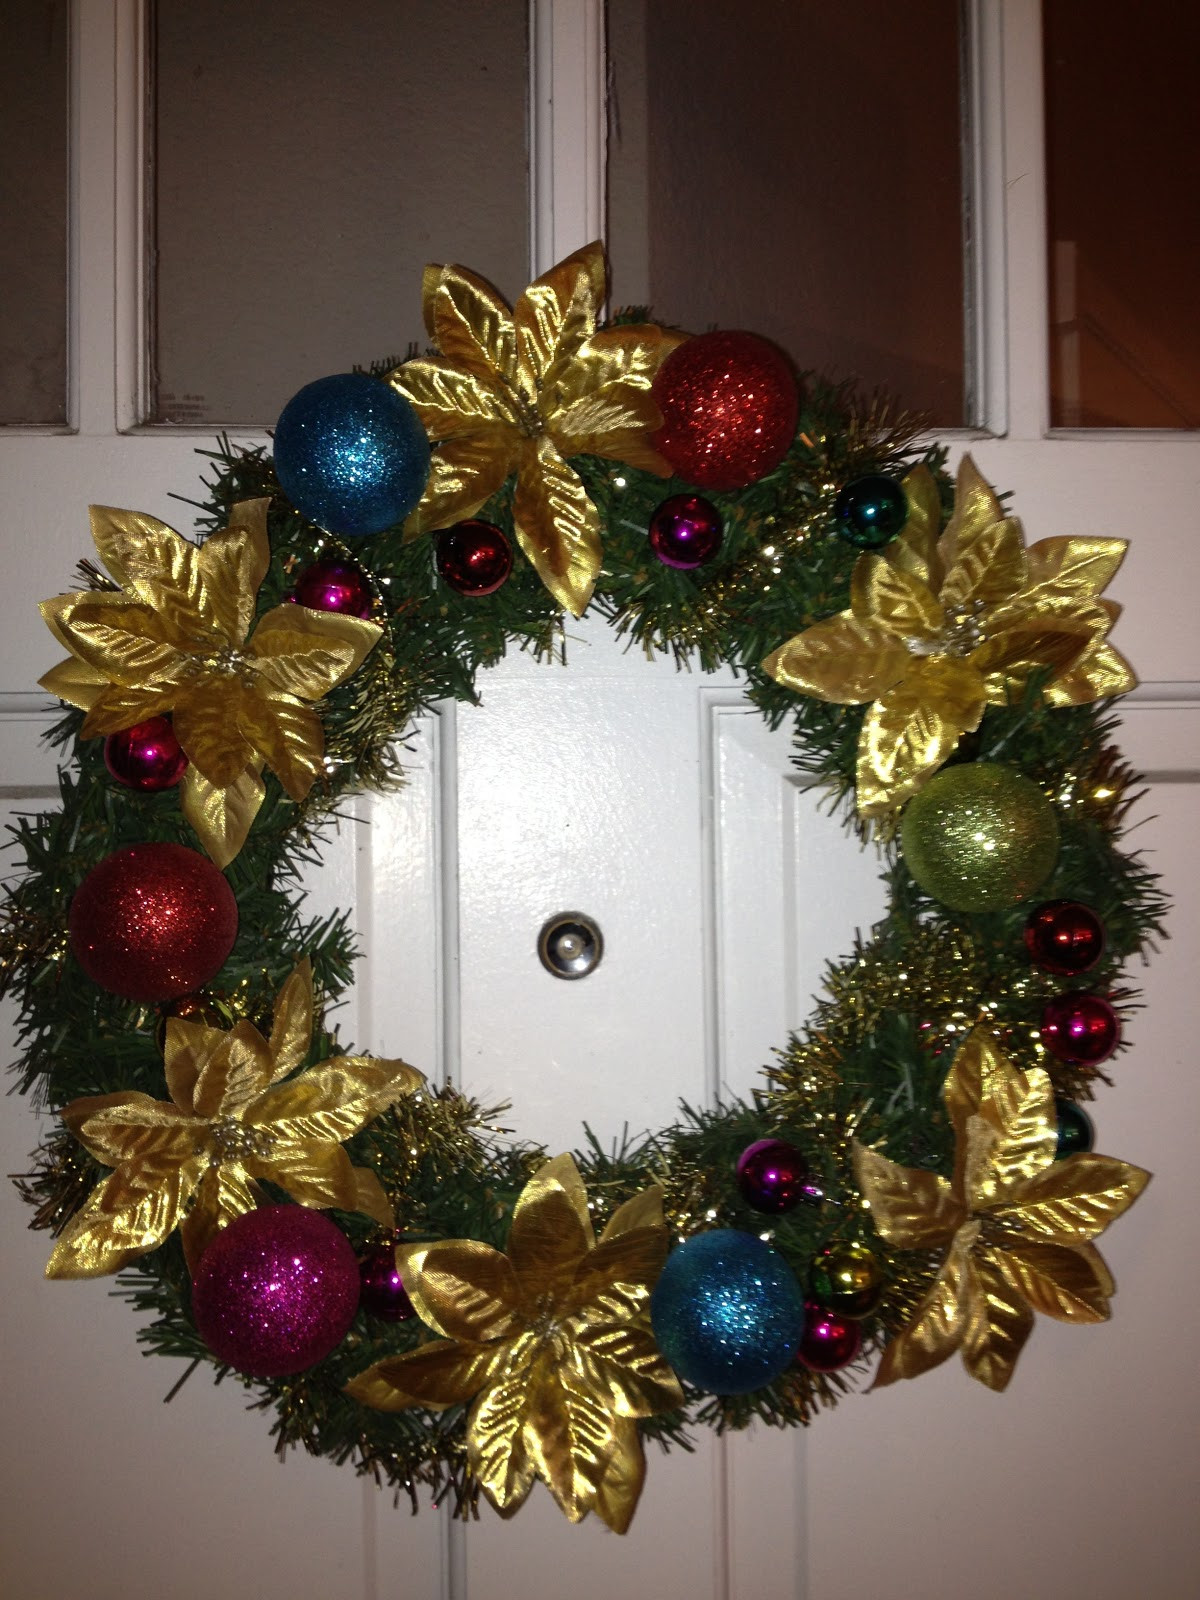 DIY Christmas Wreath Ideas
 DIY Christmas Wreaths $5 Project Decorating and Craft